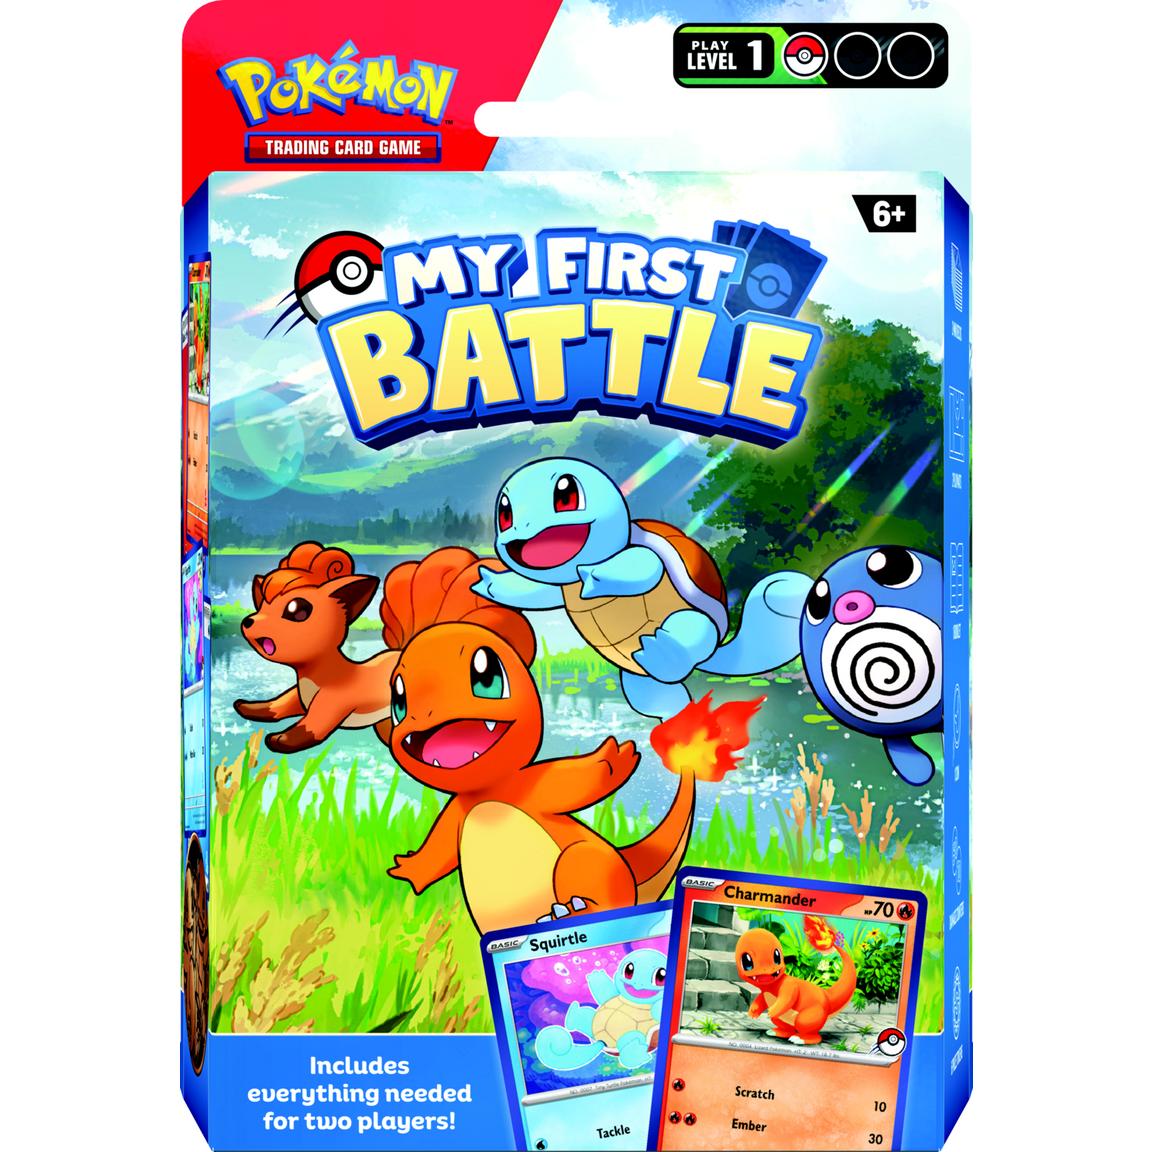 Pokémon - My First Battle